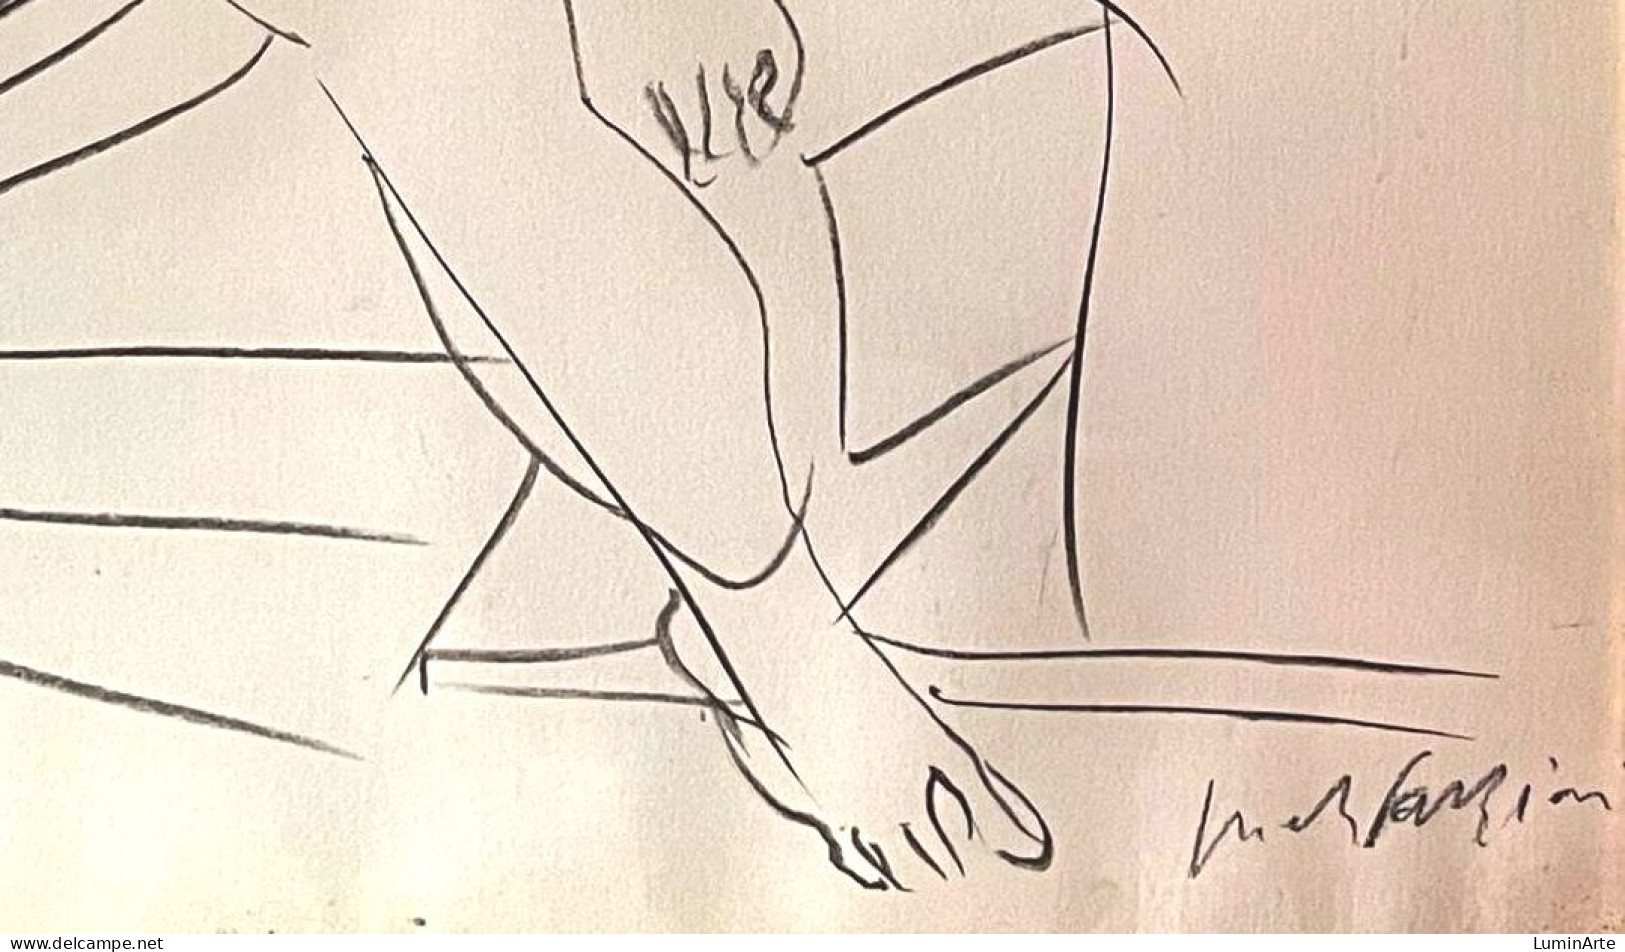 Pericle Fazzini (1913-1987) "Nude" - Disegni